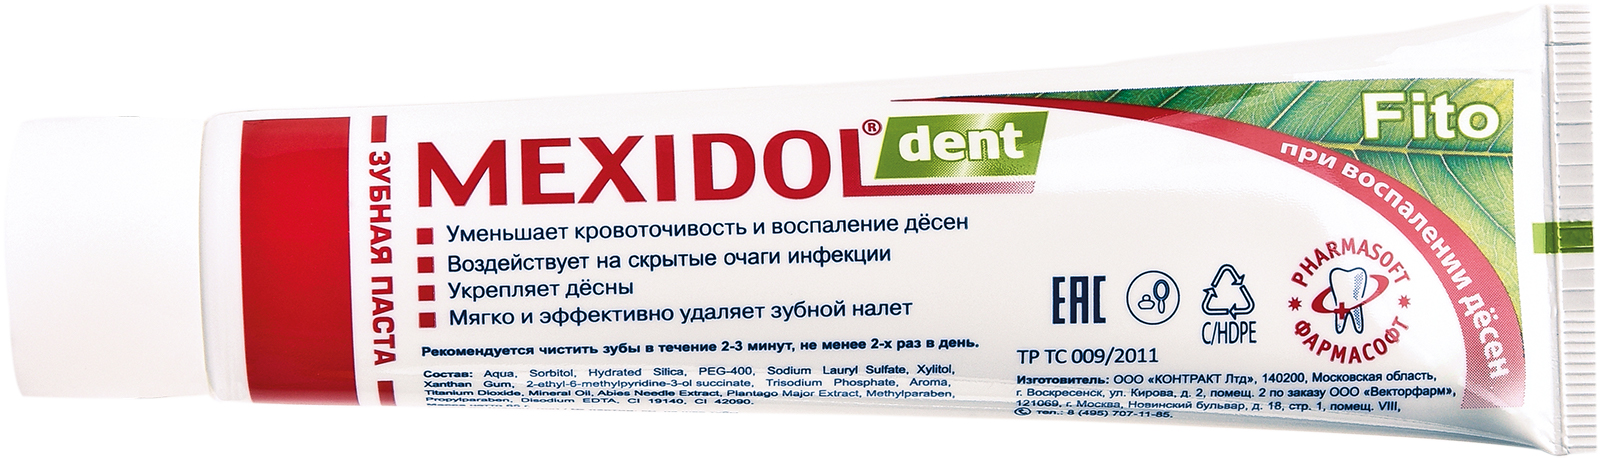 Мексидол Дент Фито, зубная паста, 100 г мексидол дент фито зубная паста 65 г